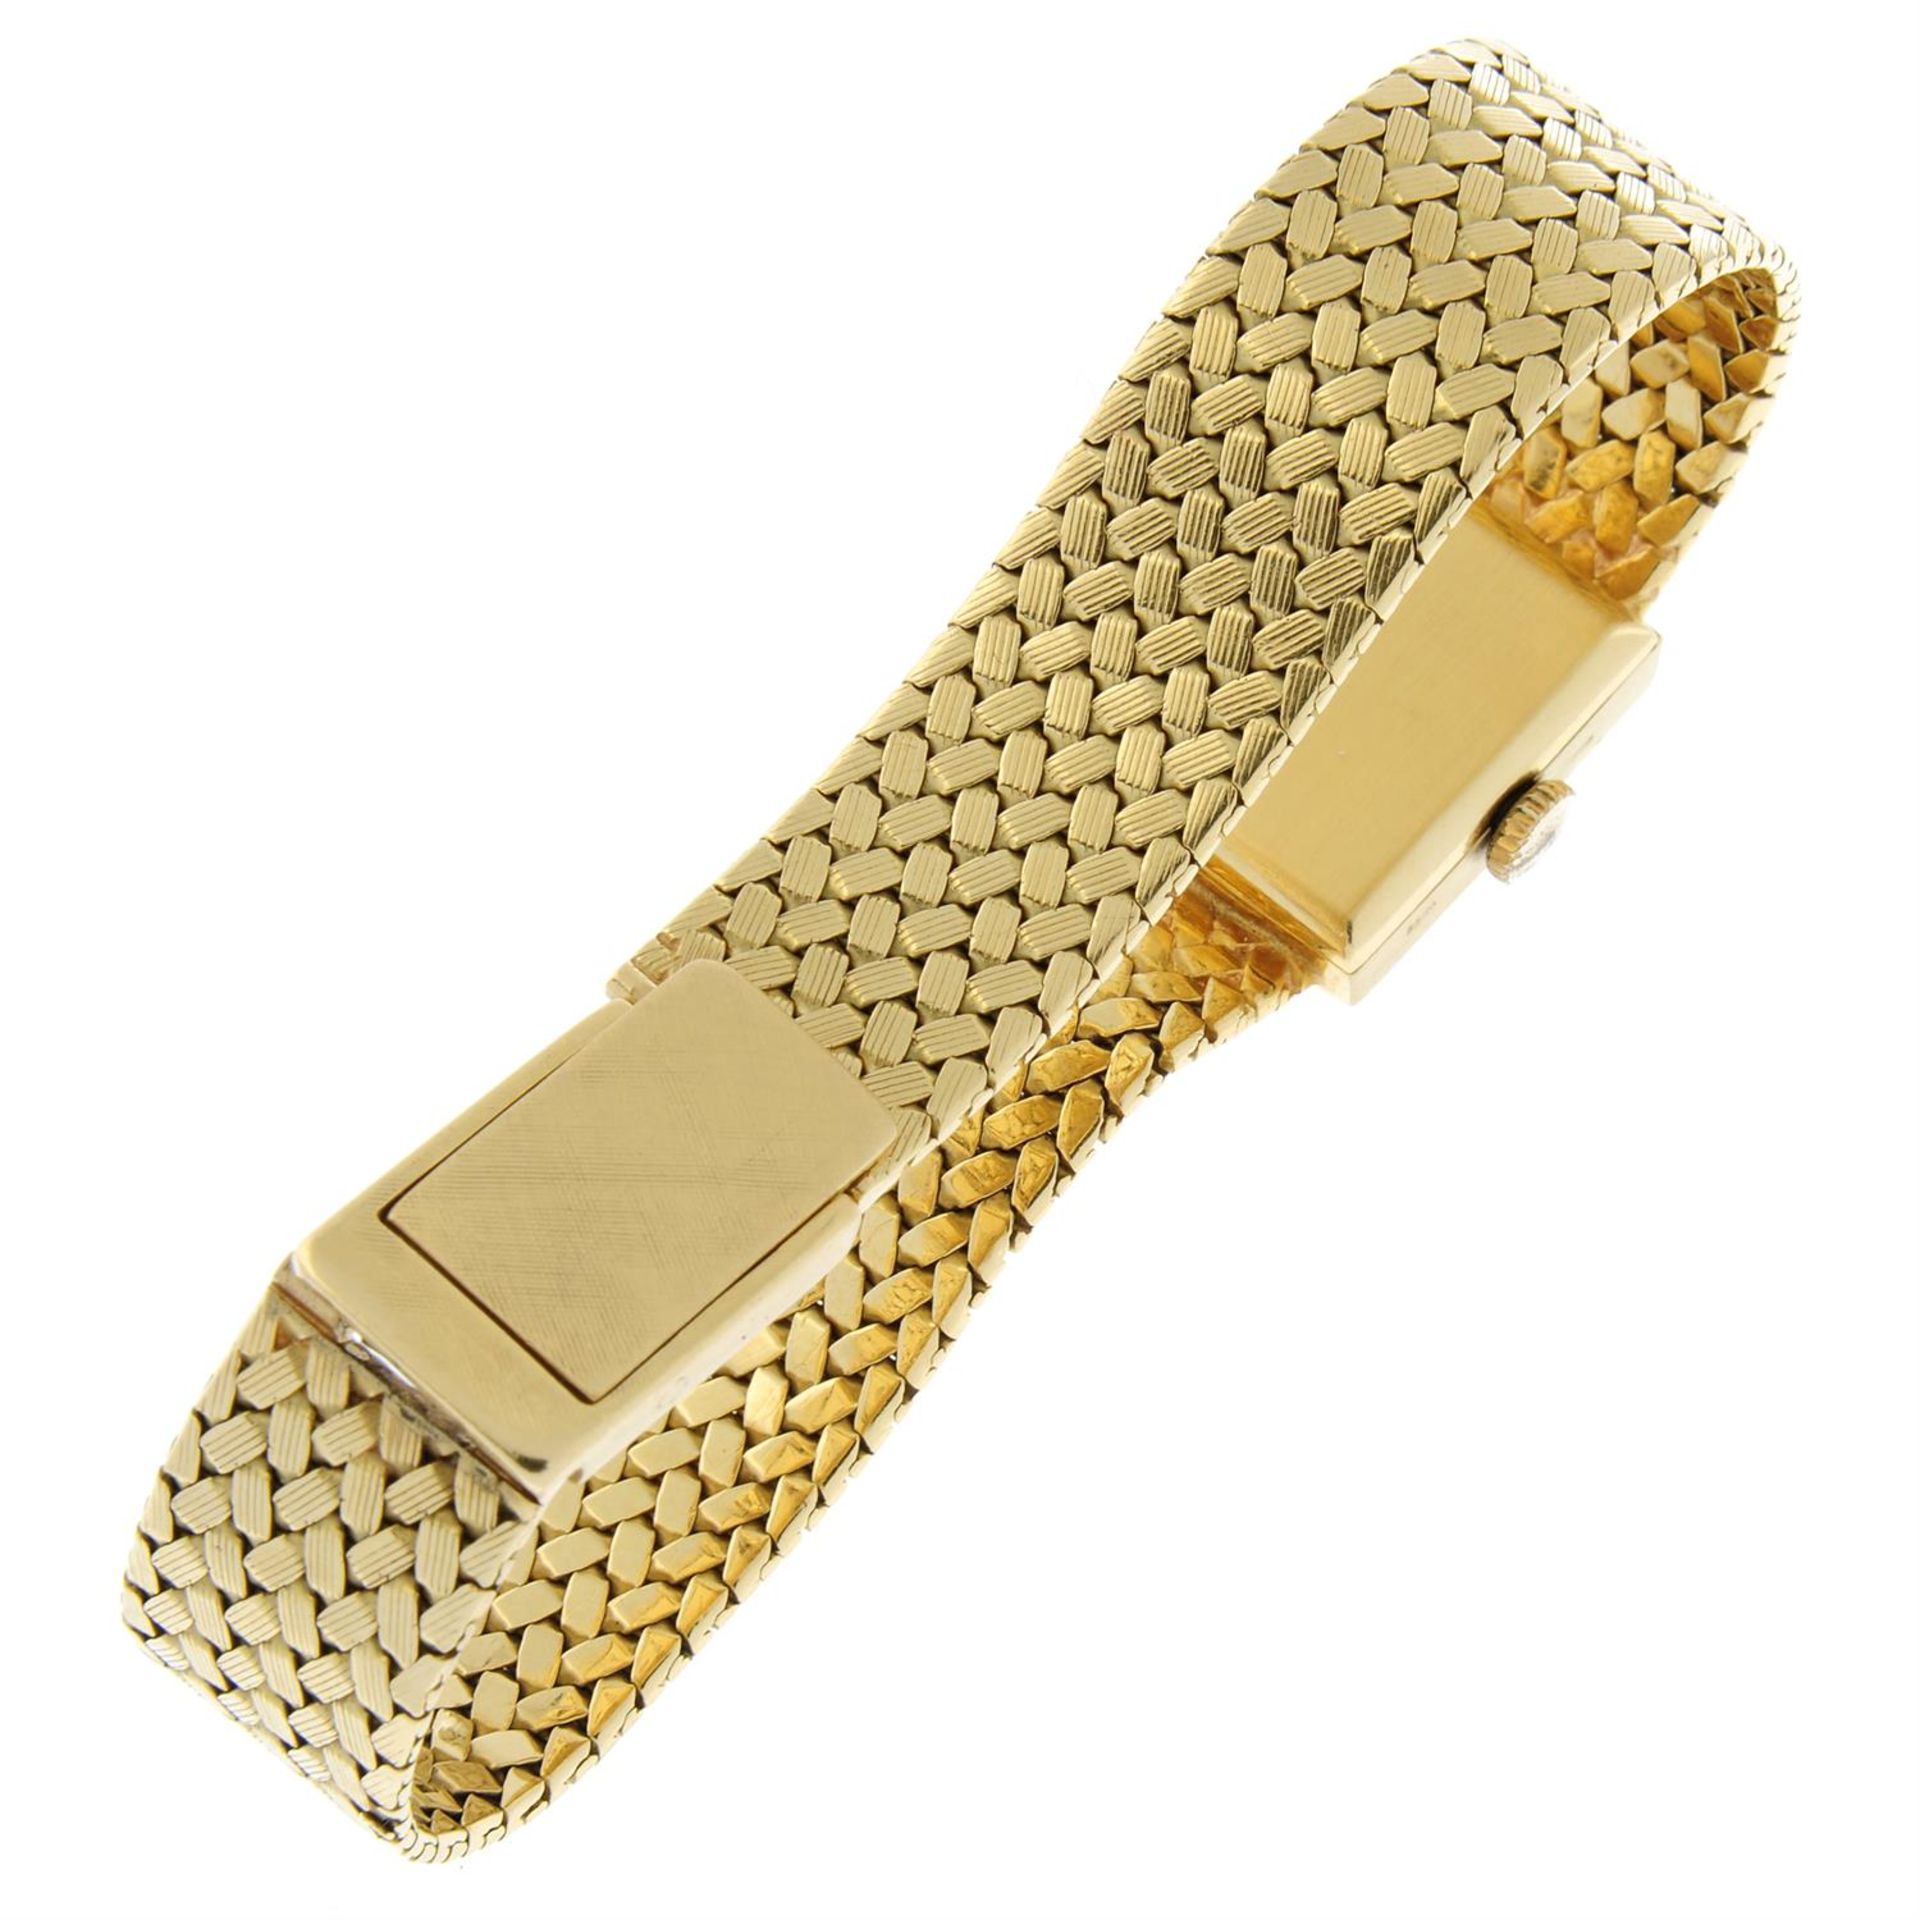 IWC - a yellow metal bracelet watch, 17x17mm. - Image 2 of 5